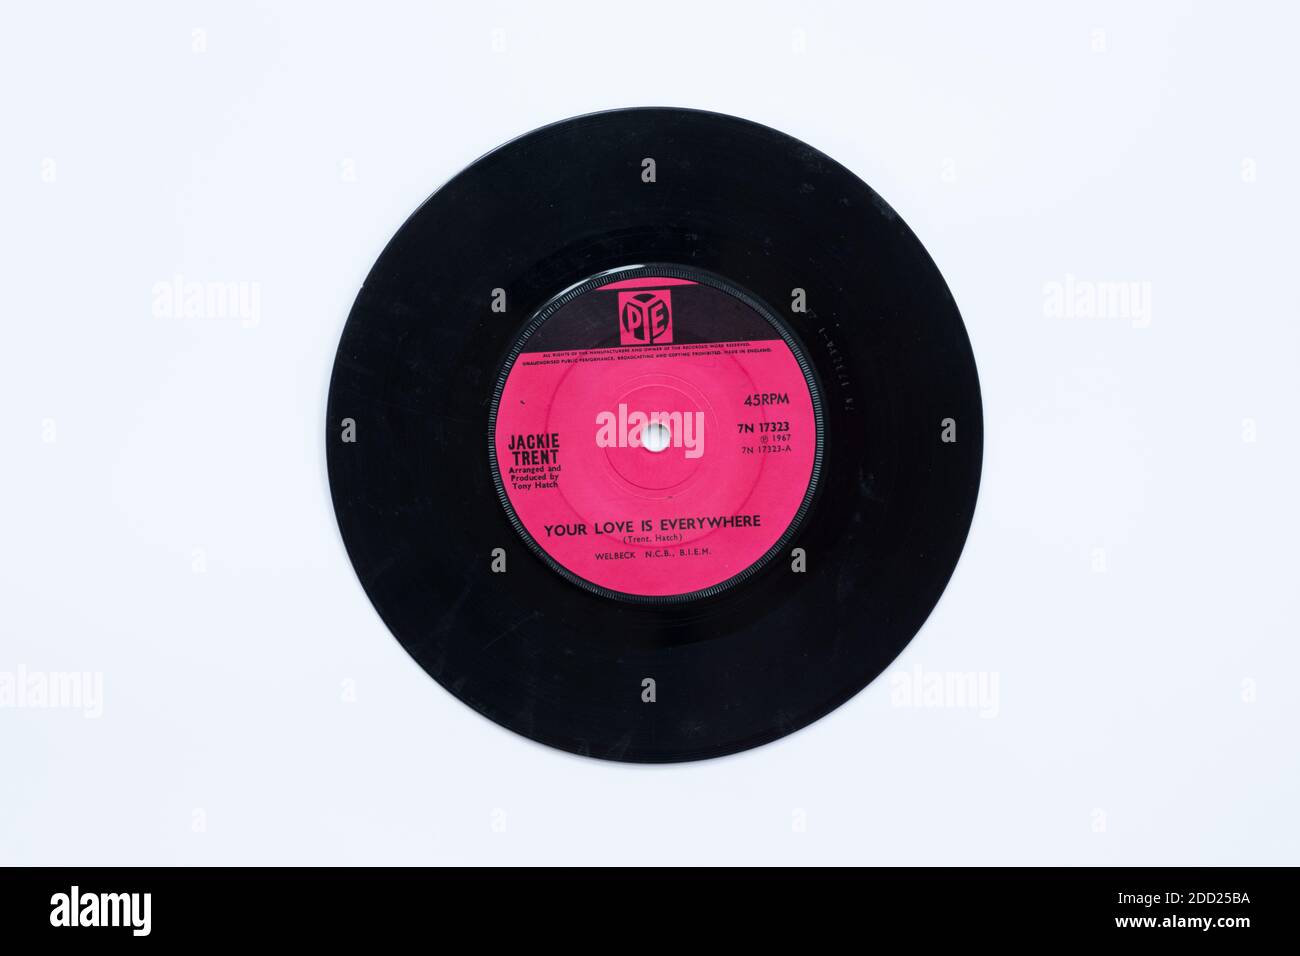 Jackie Trent - Your Love is Everywhere 7' vinyl single - Pye records Stock Photo